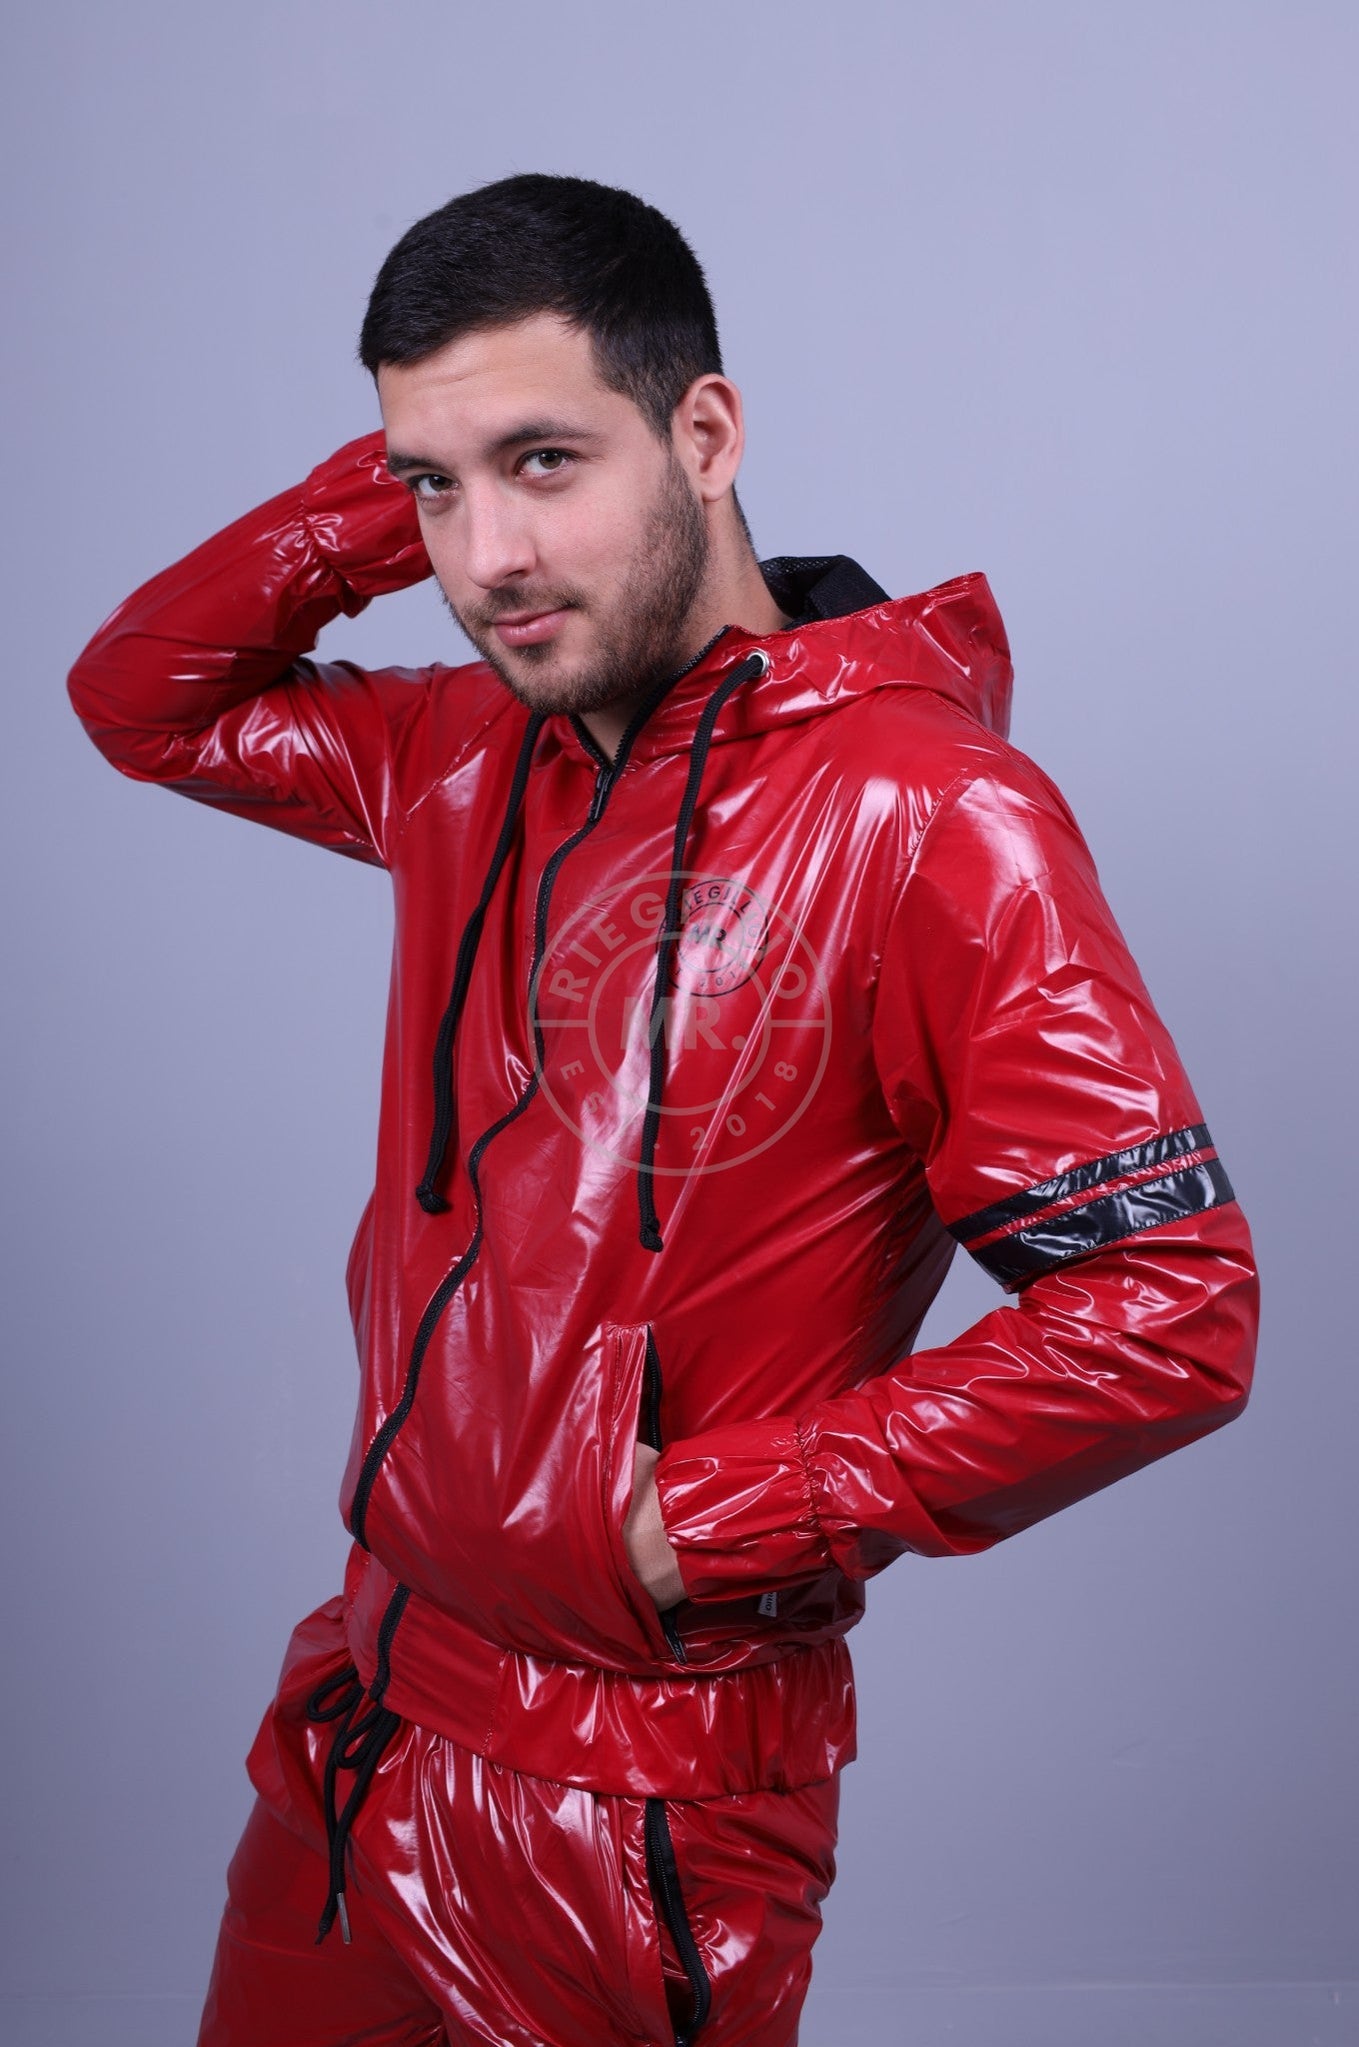 Shiny Nylon Tracksuit Jacket - Red at MR. Riegillio